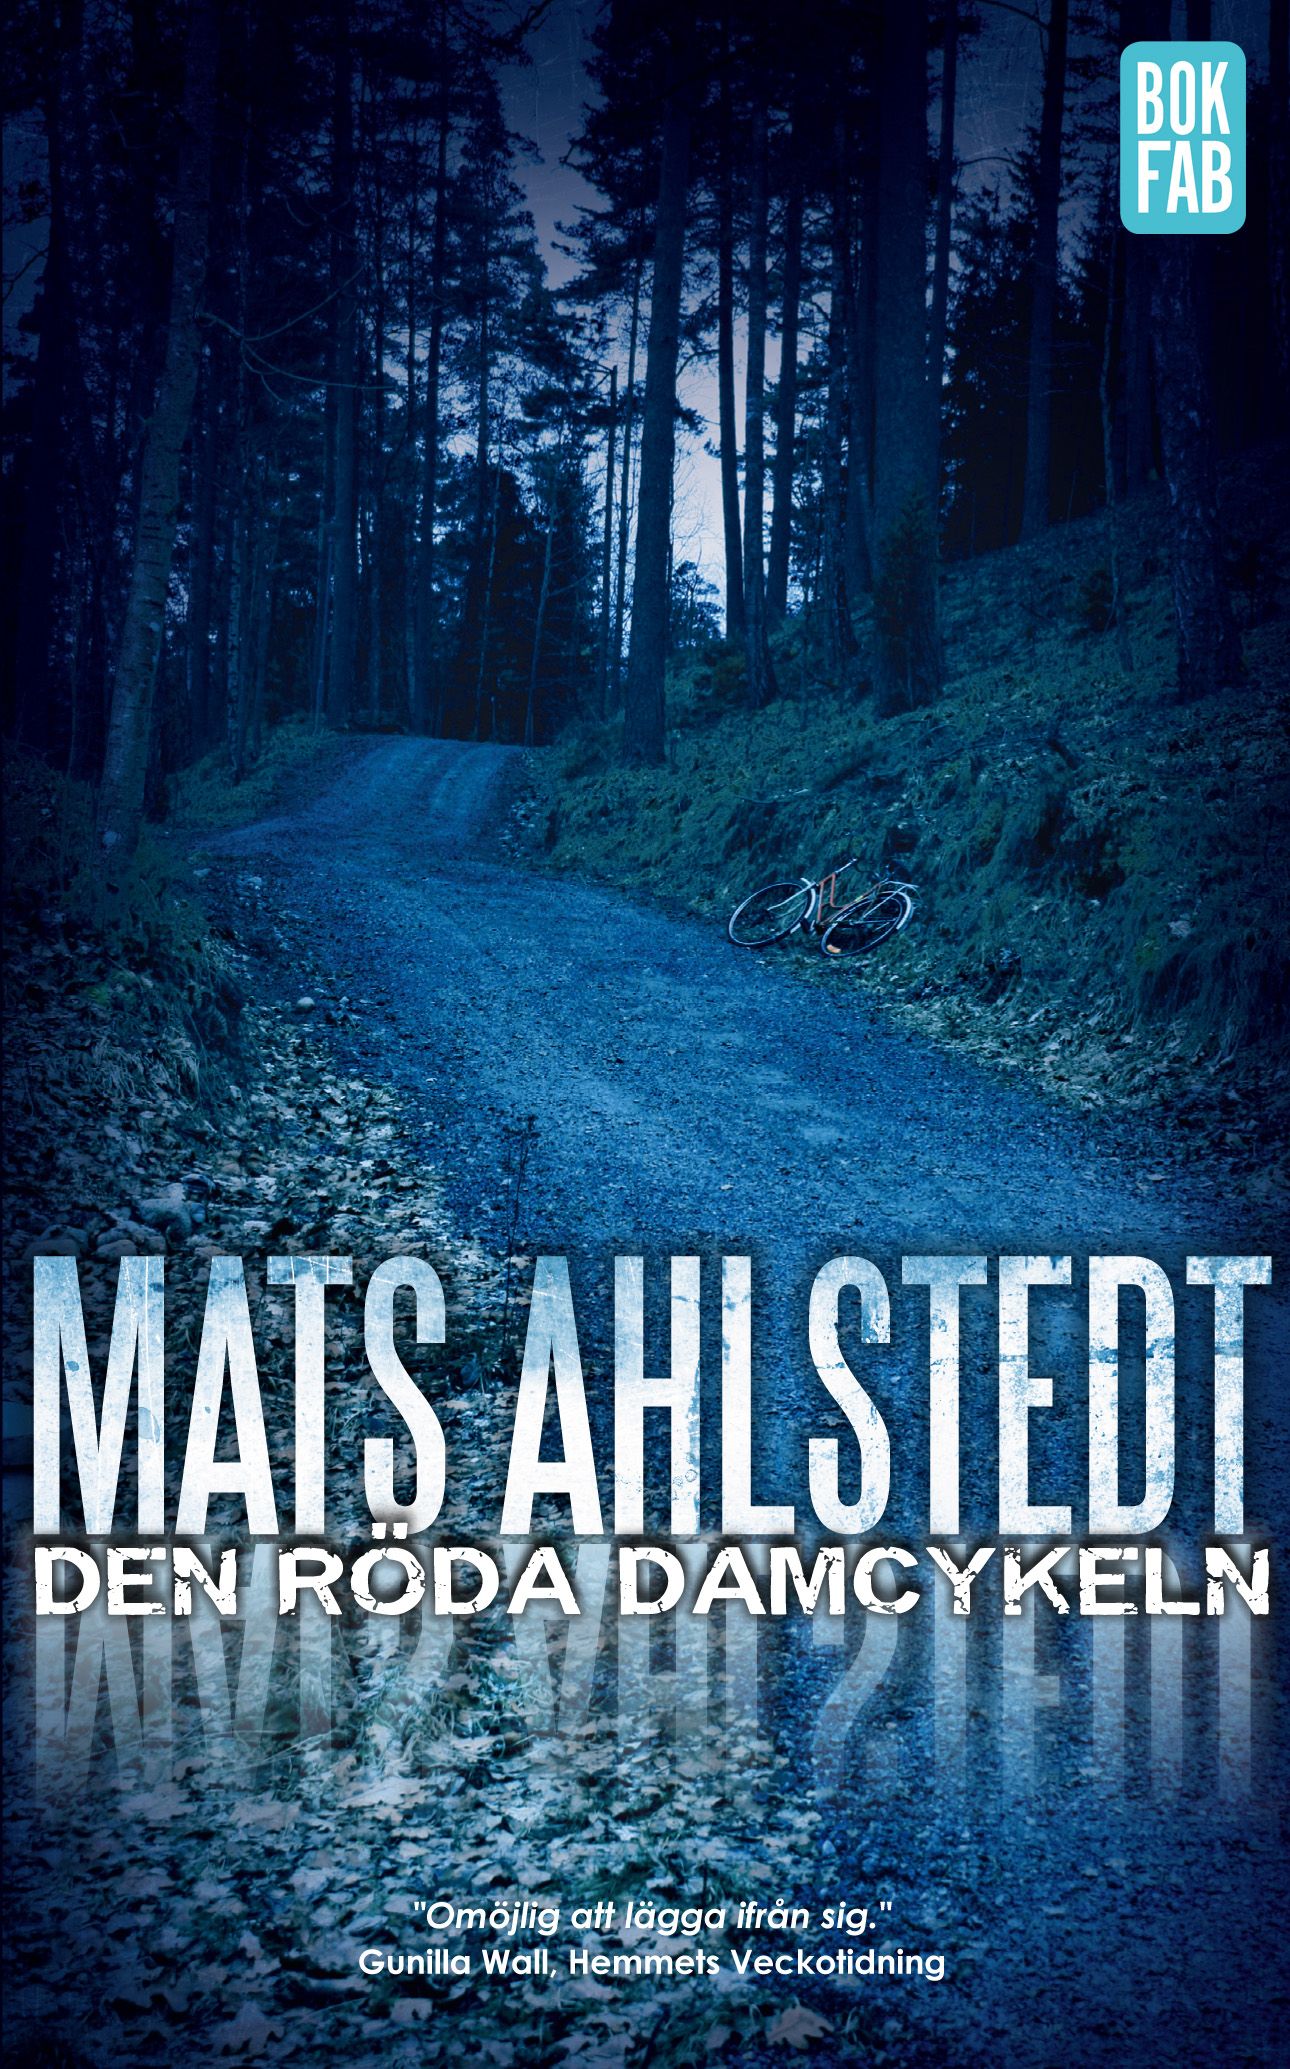 Den röda damcykeln, e-bok av Mats Ahlstedt